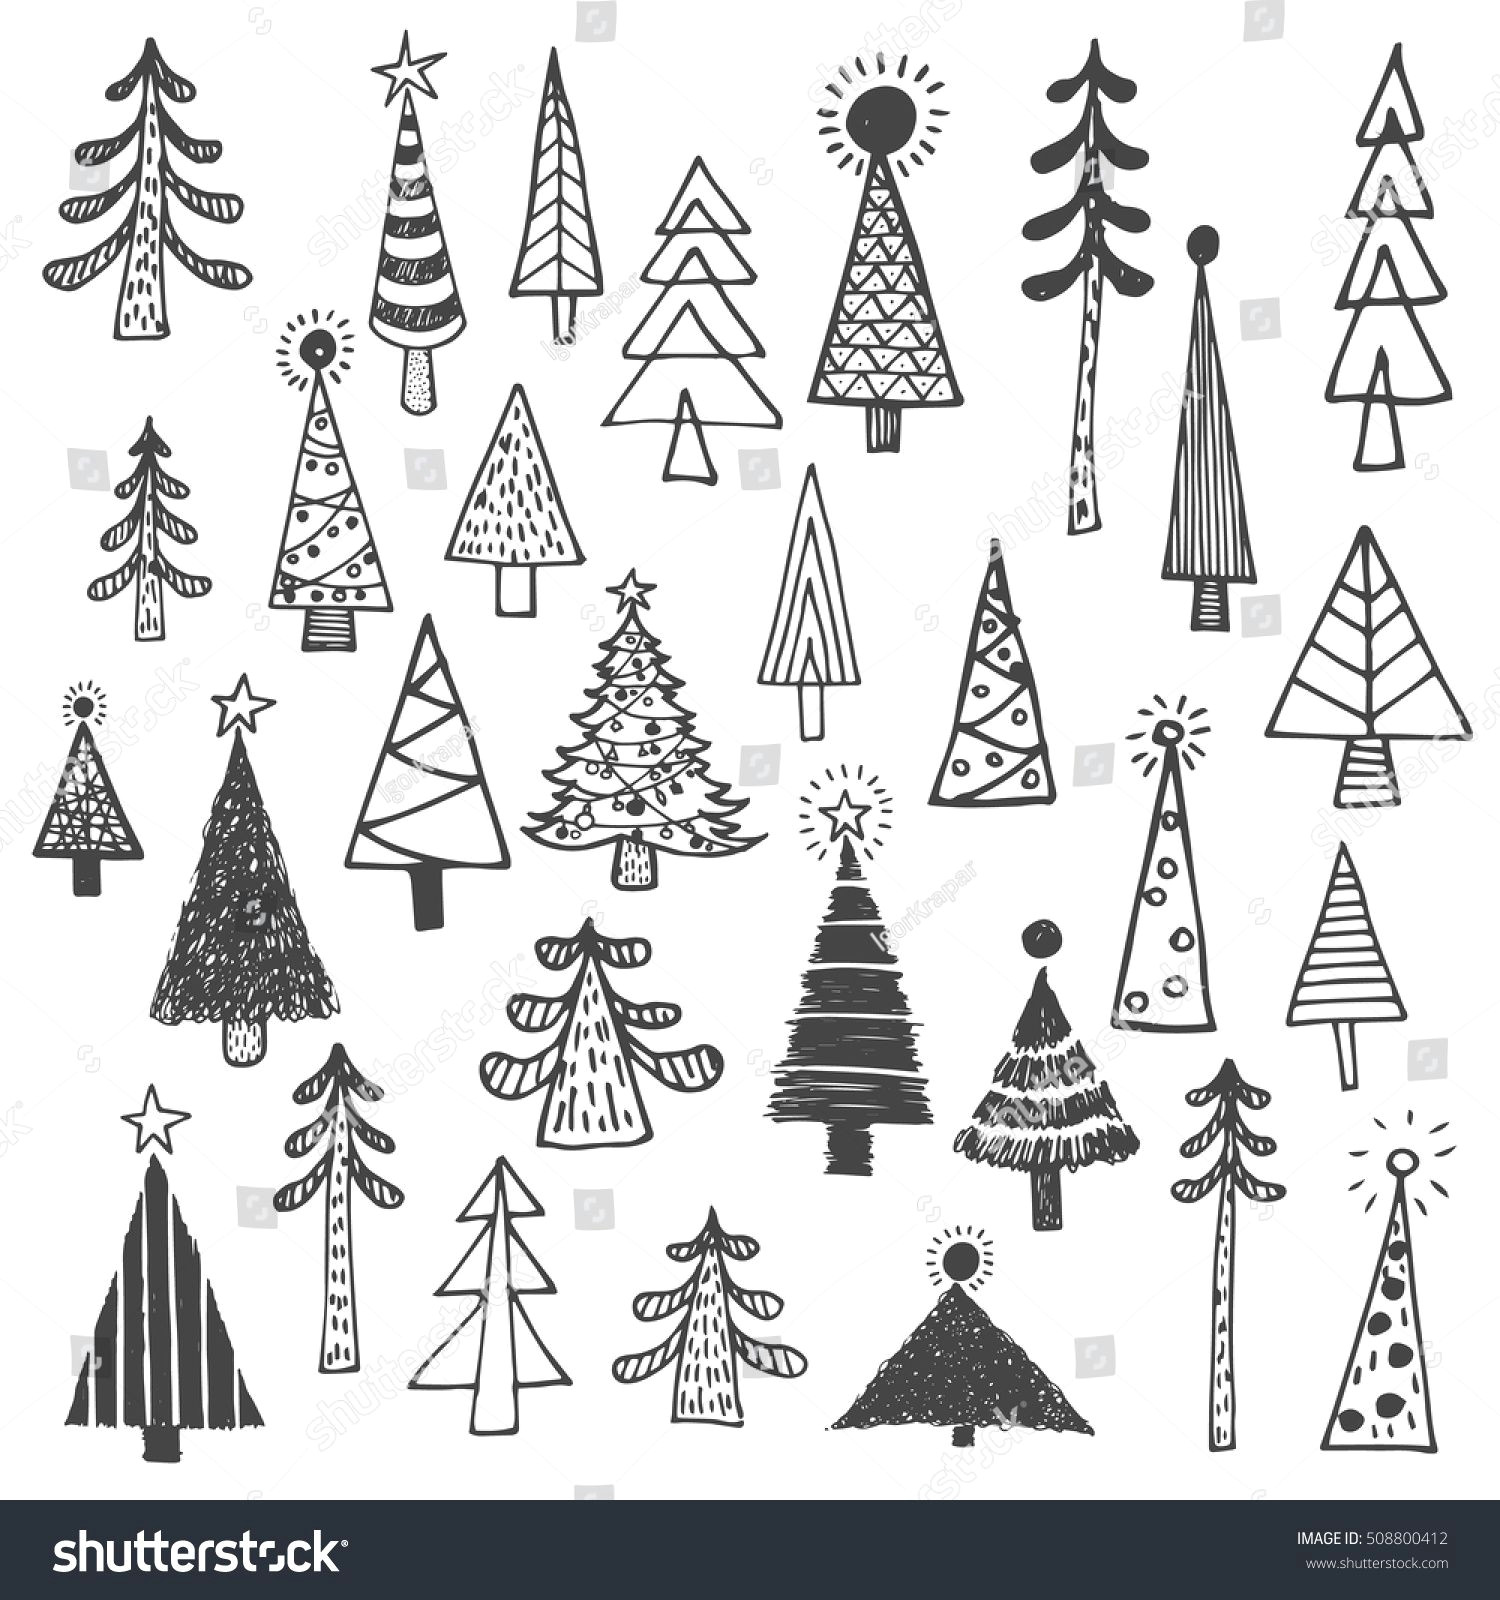 Easy Drawings Christmas Tree Christmas Tree White Spruce Fir Fir Tree Simple Drawing Set Draw